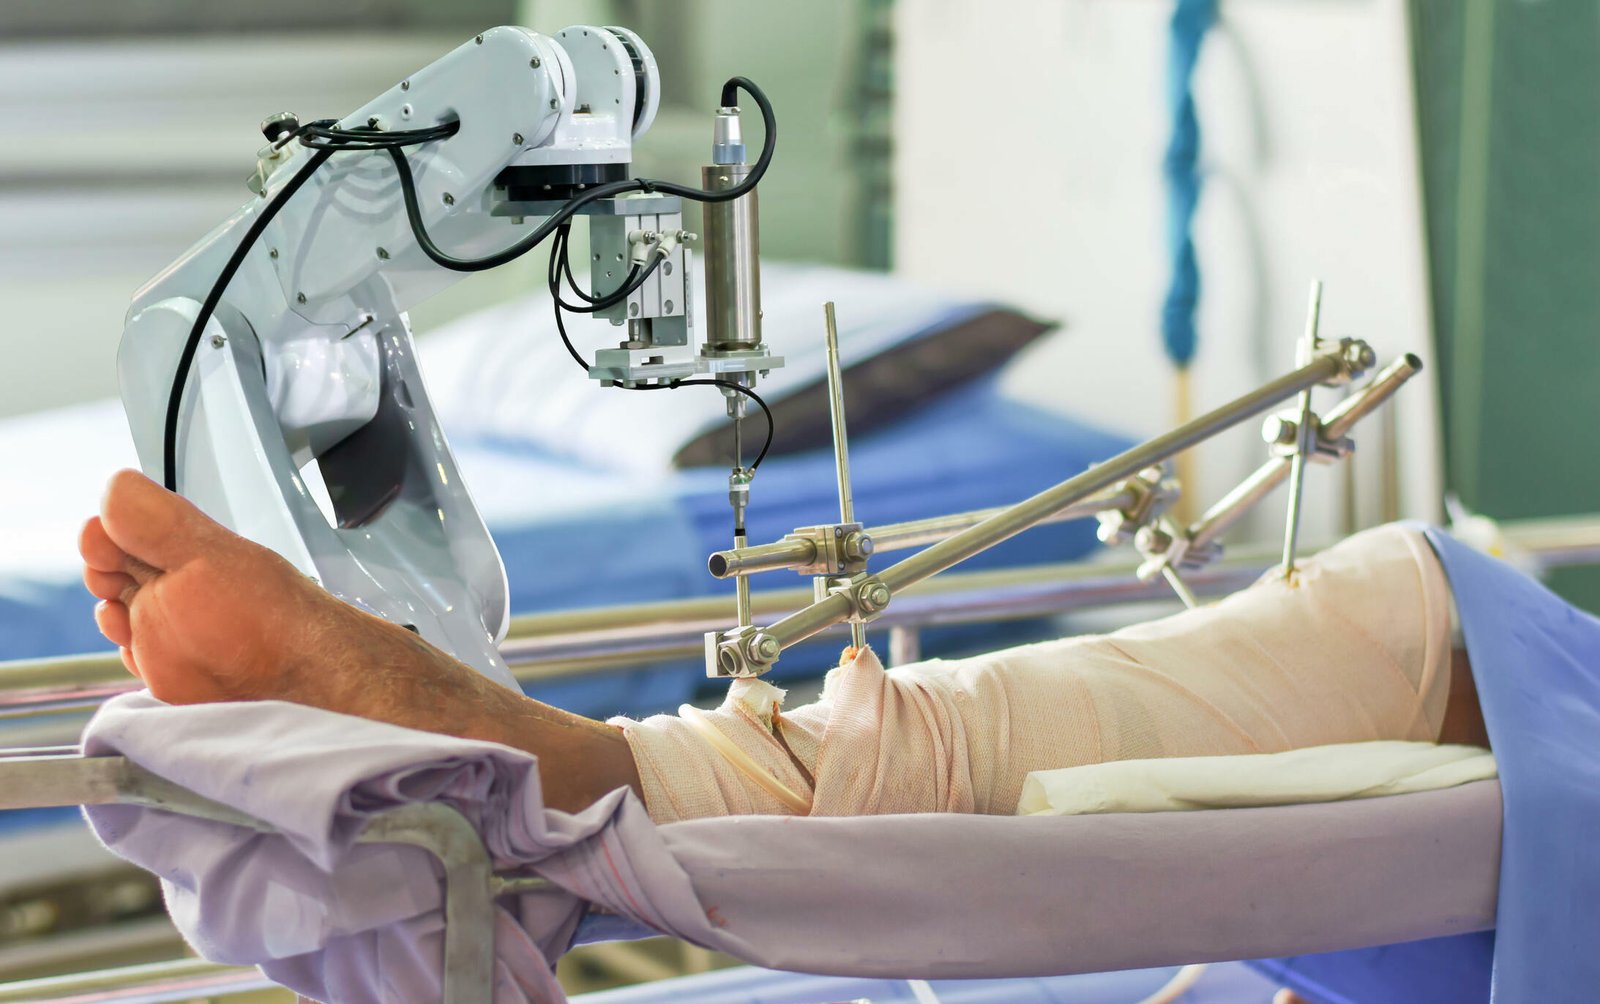 Robotic knee Replacement Surgery